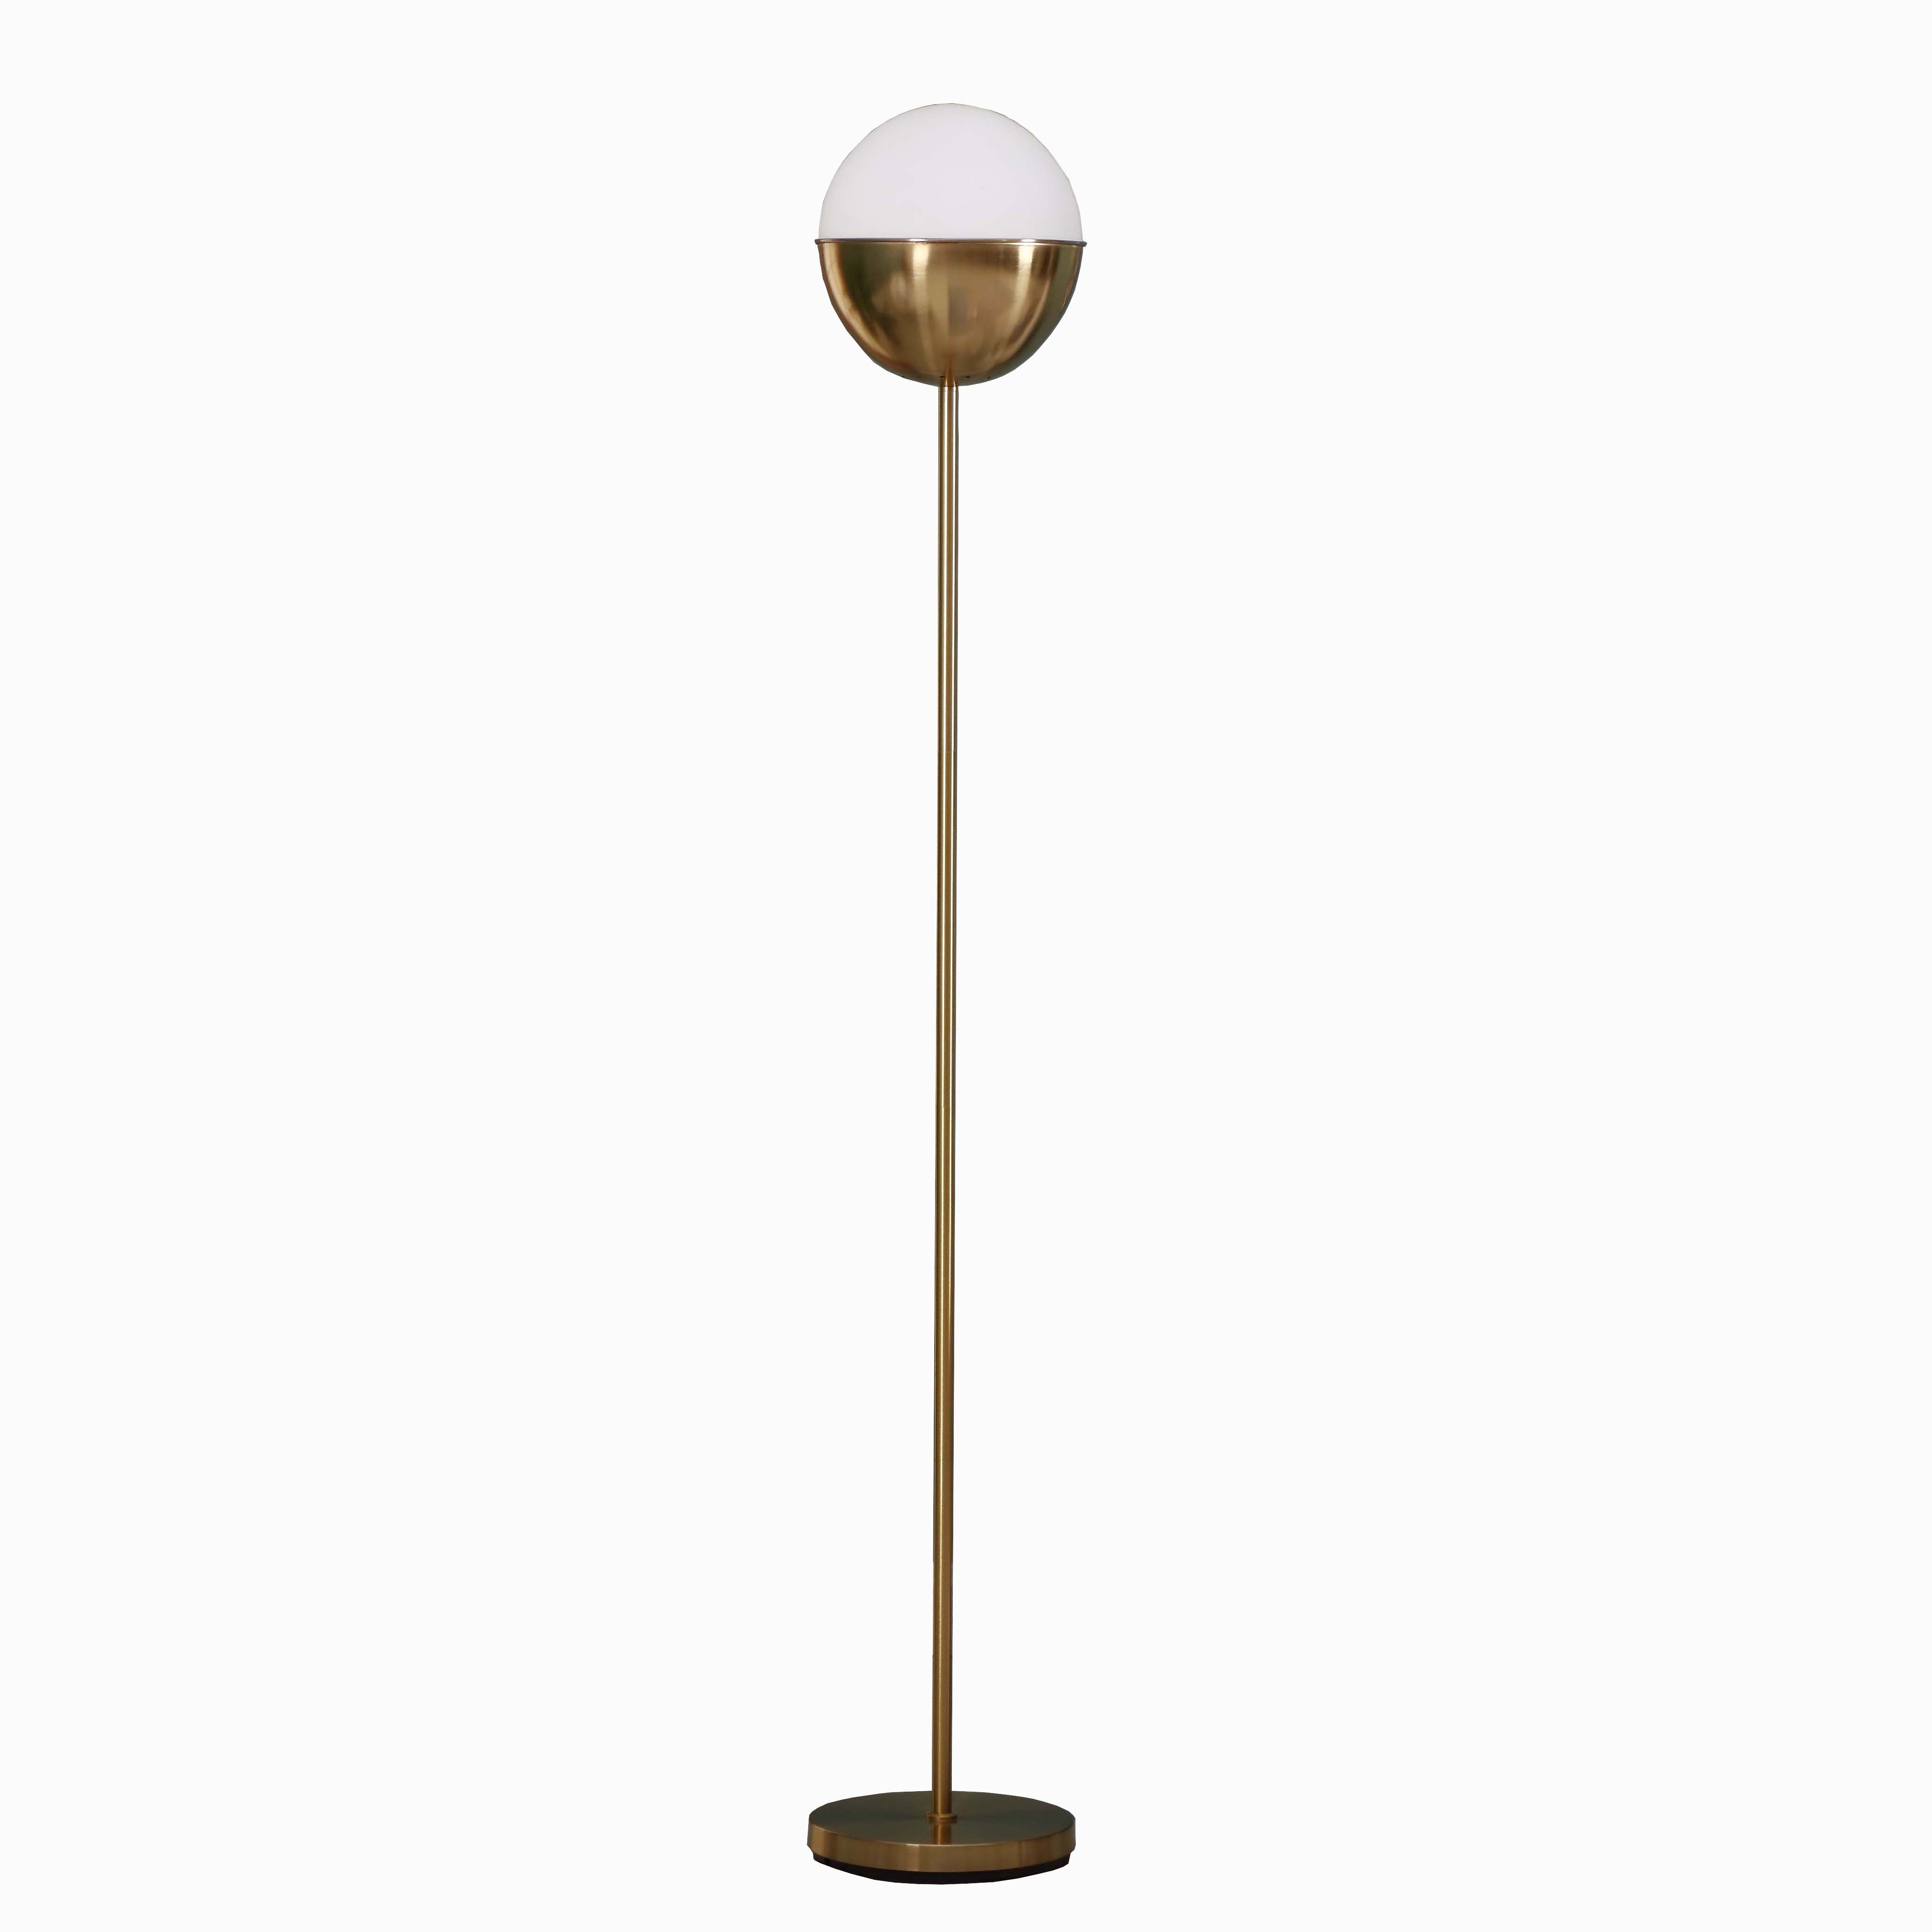 Oil Rubbed Bronze Floor Lamp,Modern Floor Lamp,Floor Lamp Led | Goodly Light-GL-FLM05 Featured Image